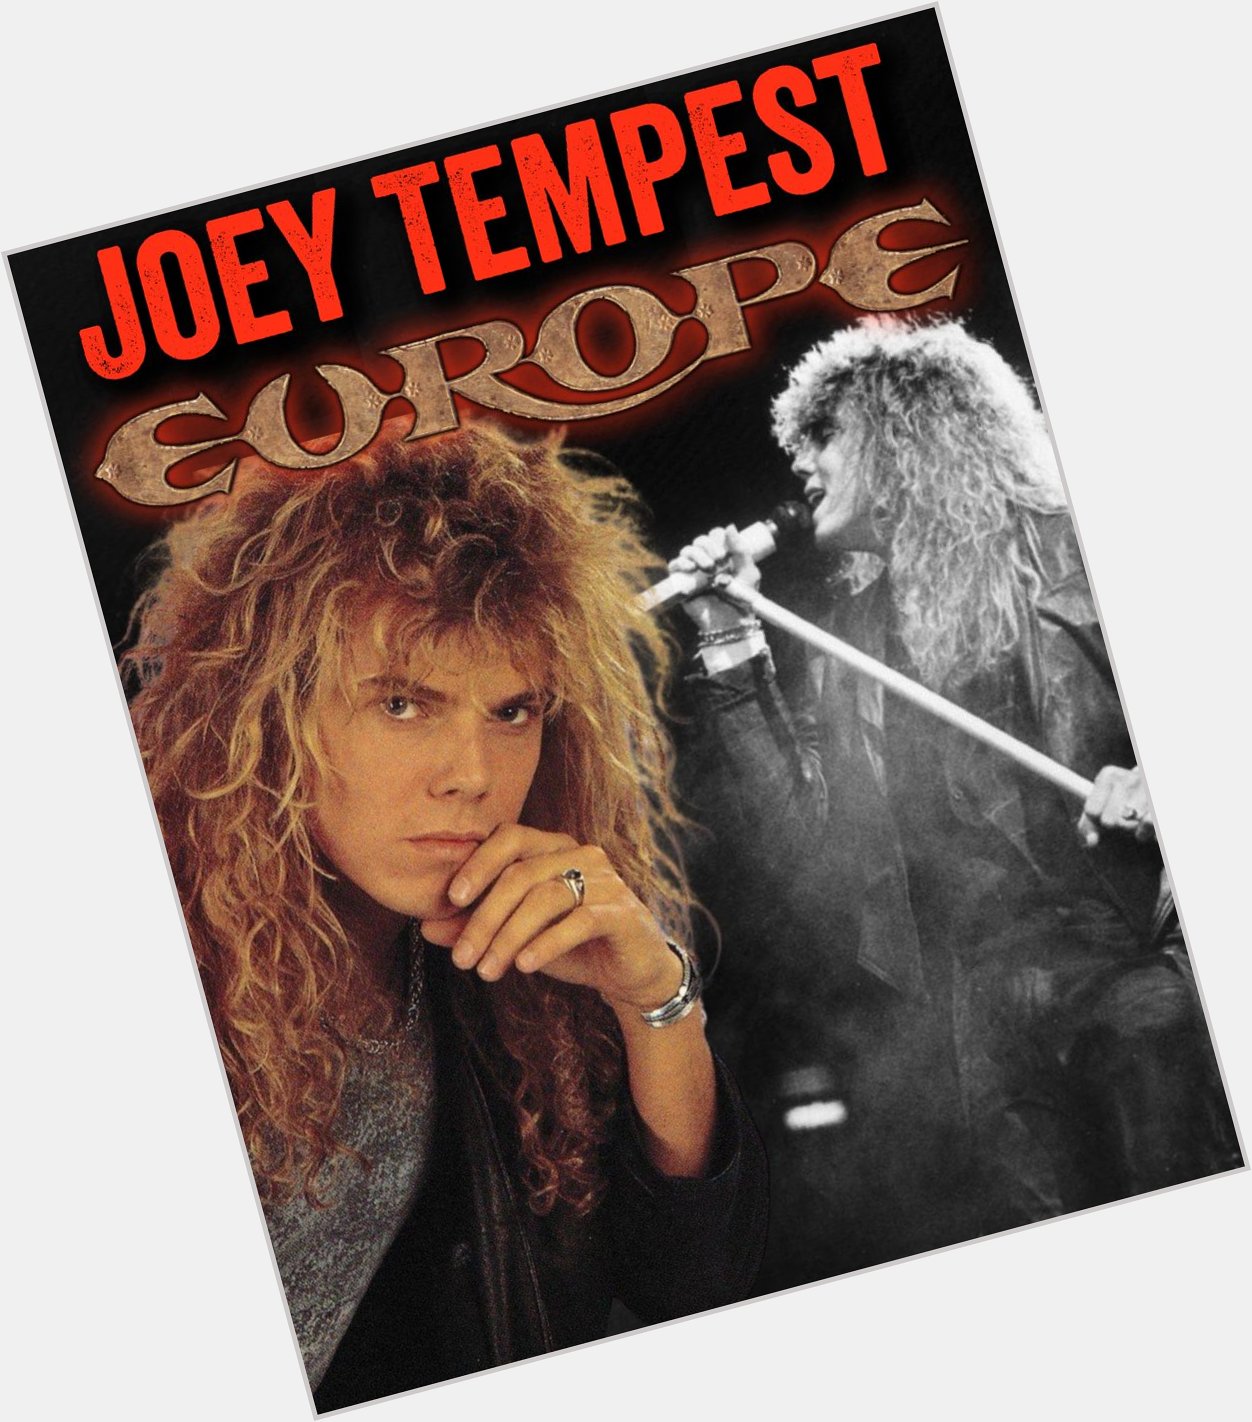 Happy Birthday Joey Tempest
Lead singer Europe
August 19, 1963 Stockholm, Sweden 